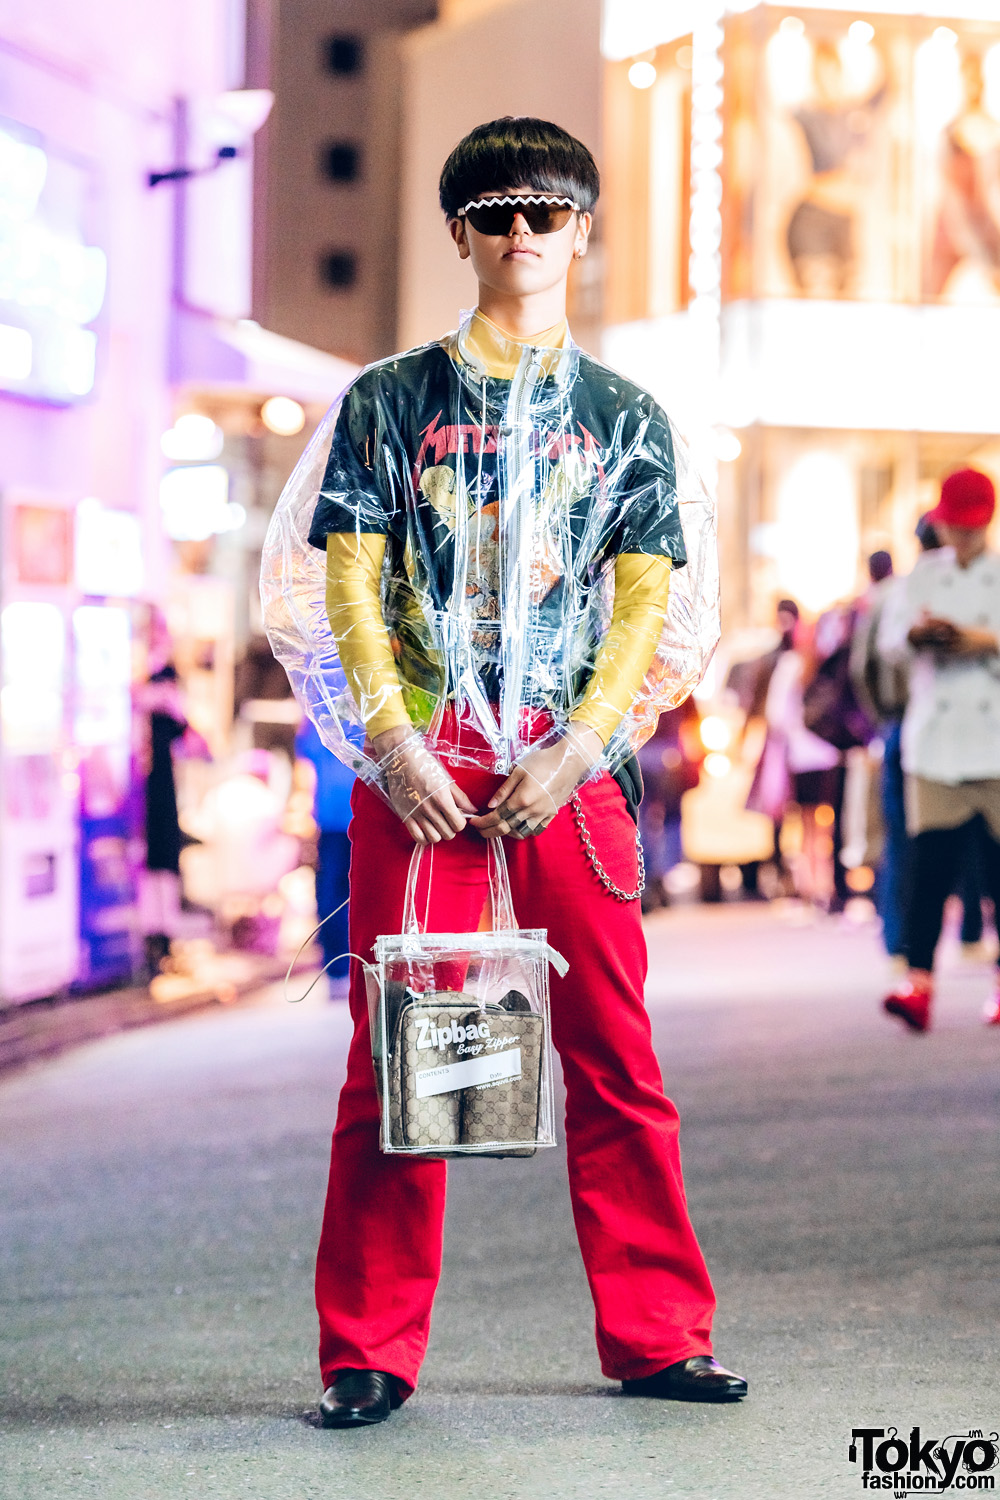 Japanese Streetwear in Harajuku w/ Avalone See Through Jacket, Metallica Tee & LAD Musician Boots